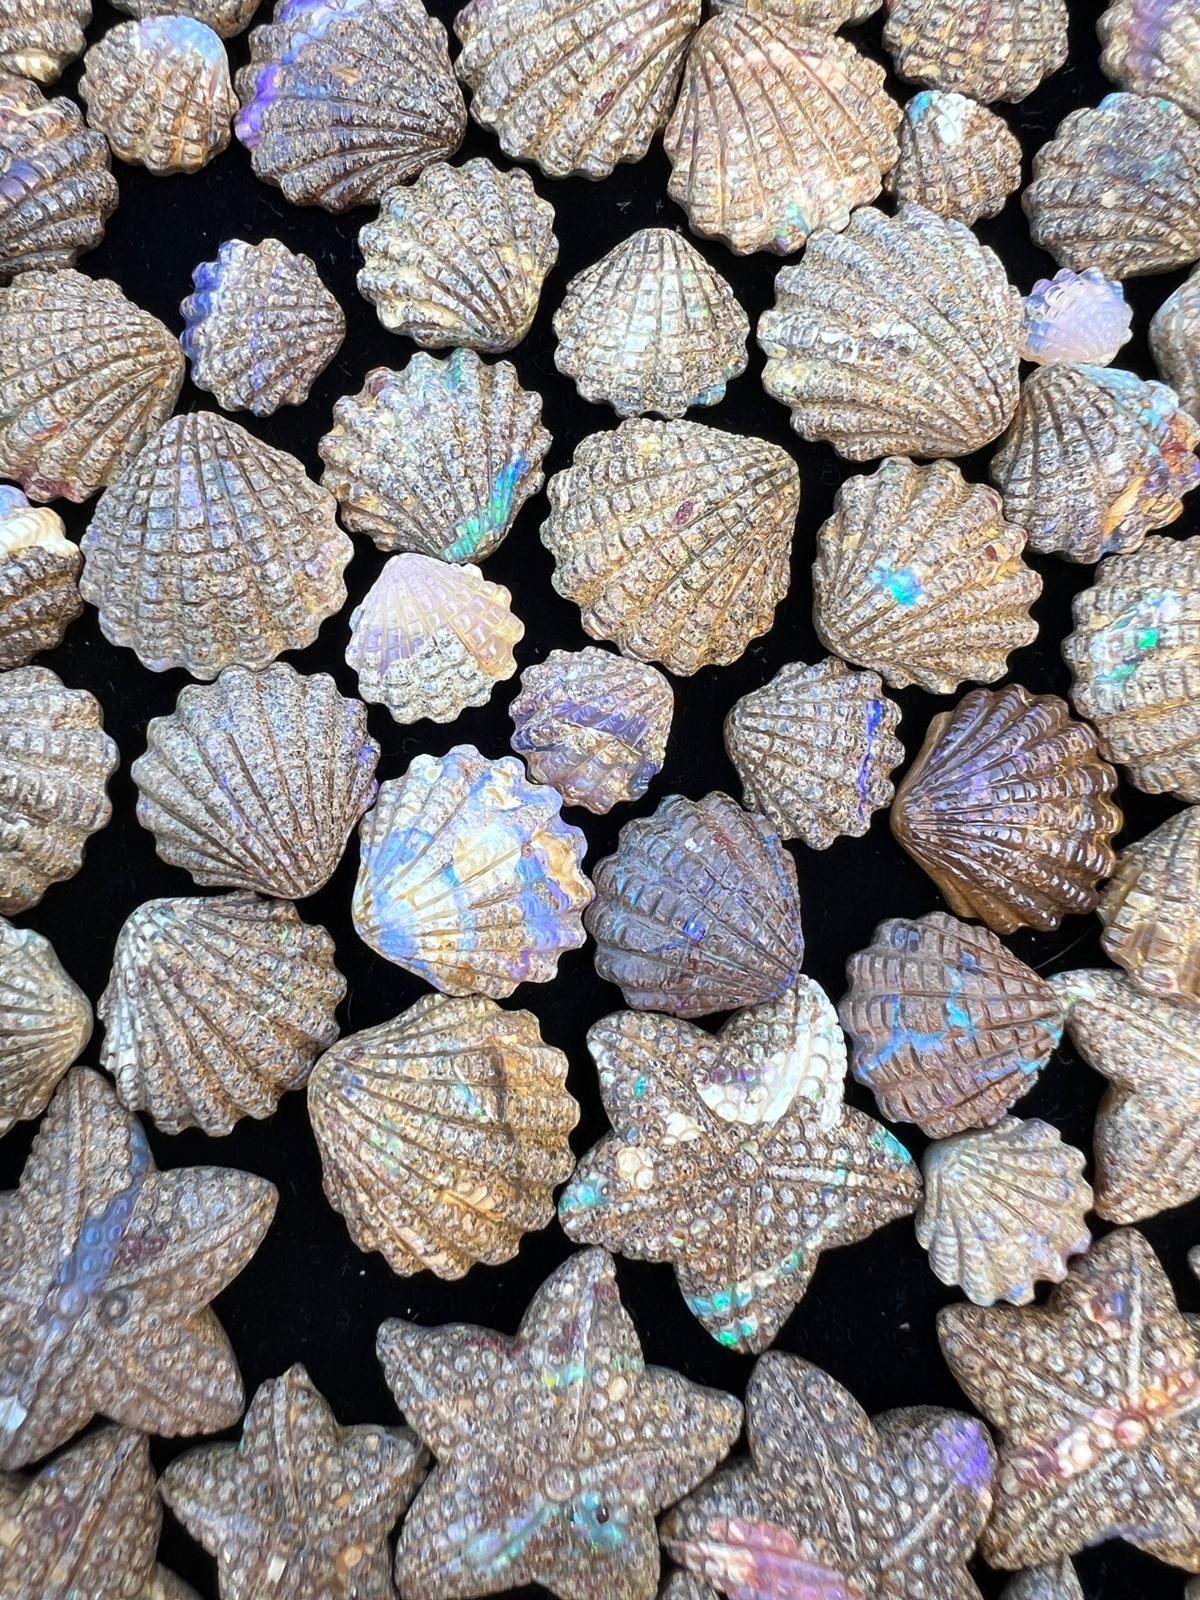 Exquisite 12.37 Ct Australian Boulder Opal Matrix Scallop Shell Carving